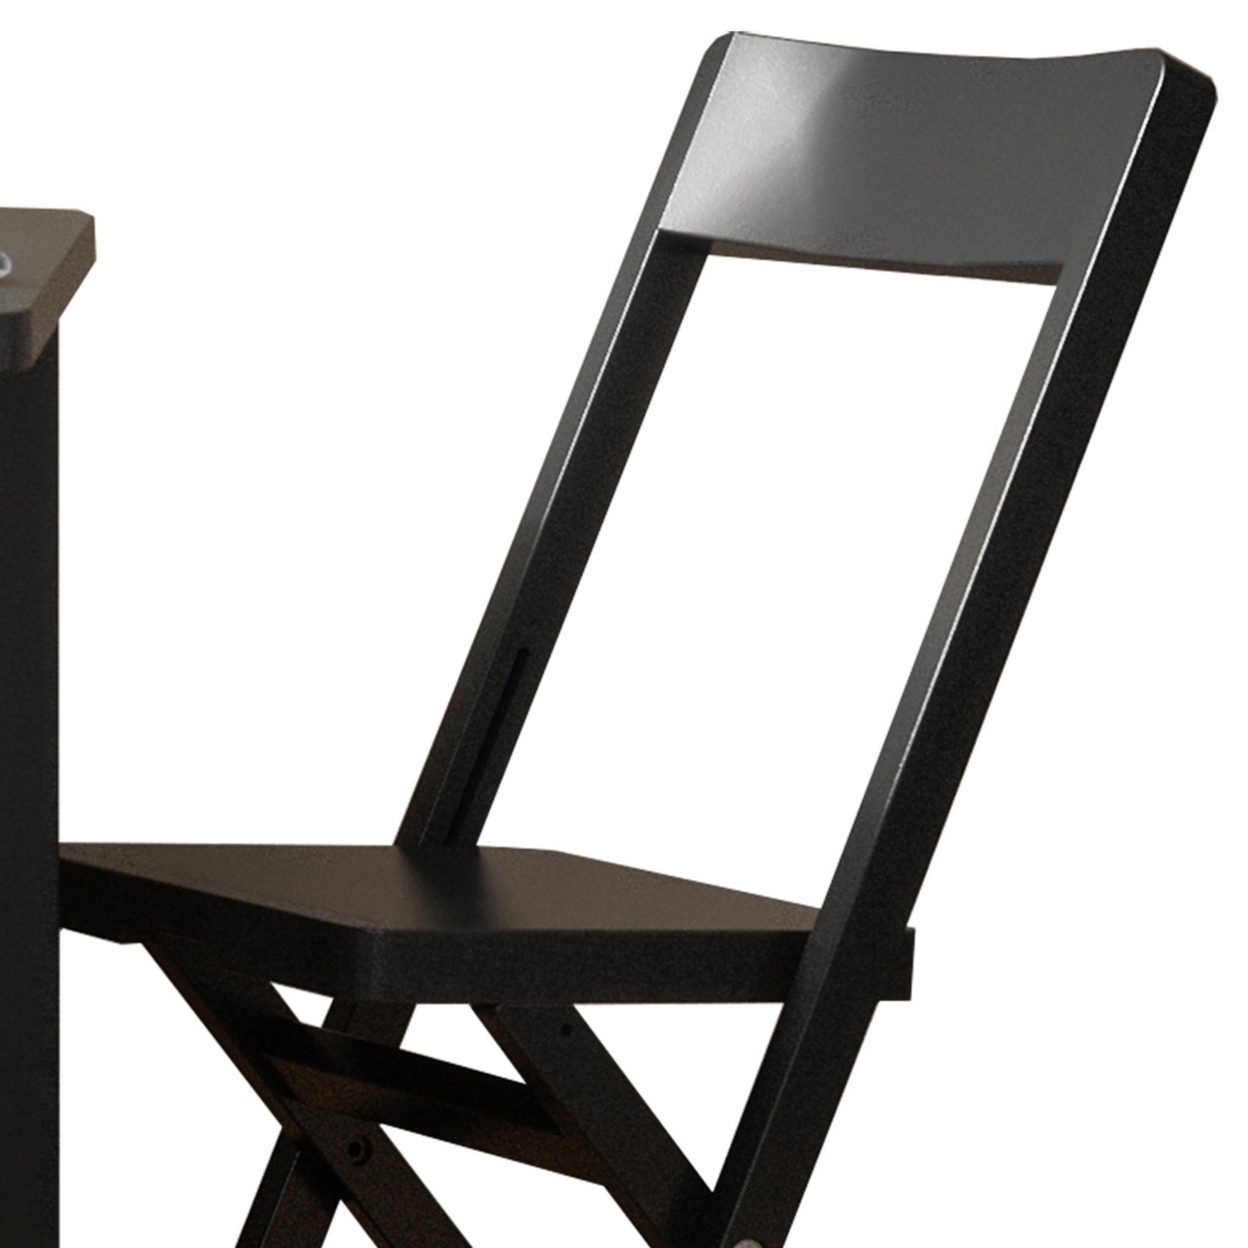 3 Piece Corner Table Set With 2 Chairs Modern, Espresso Brown Rubberwood- Saltoro Sherpi